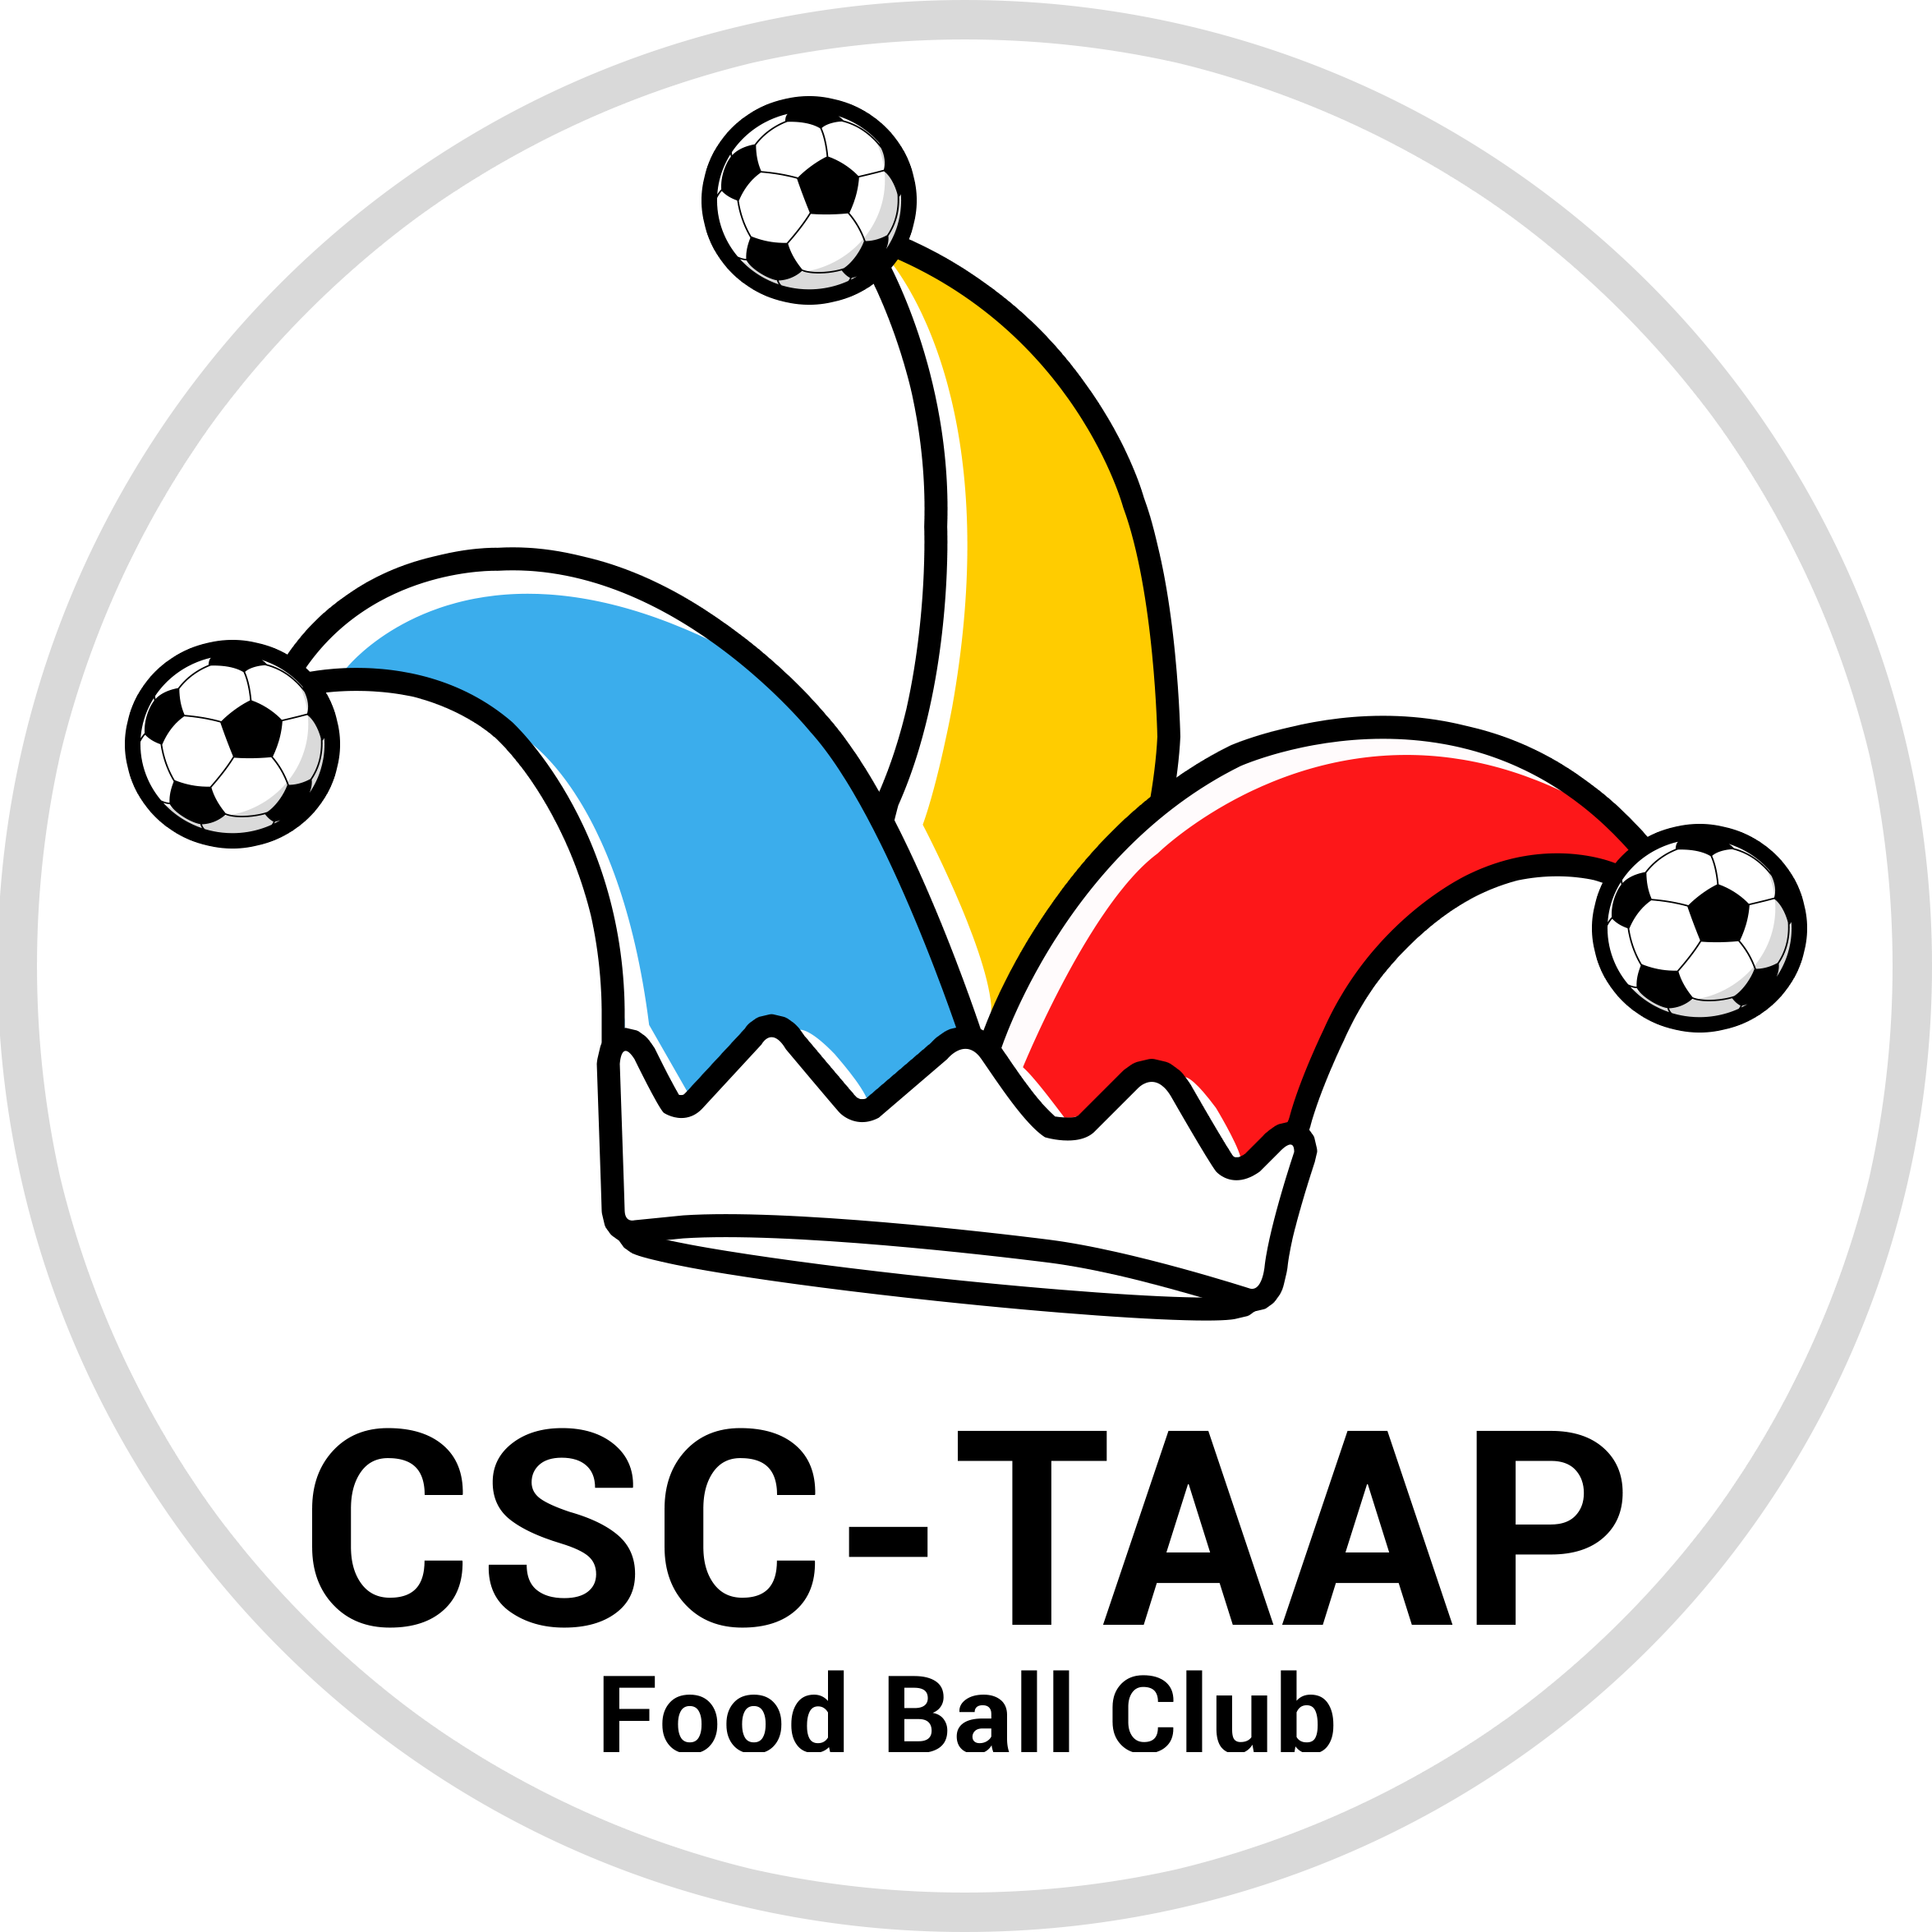 CSC - TAAP FC